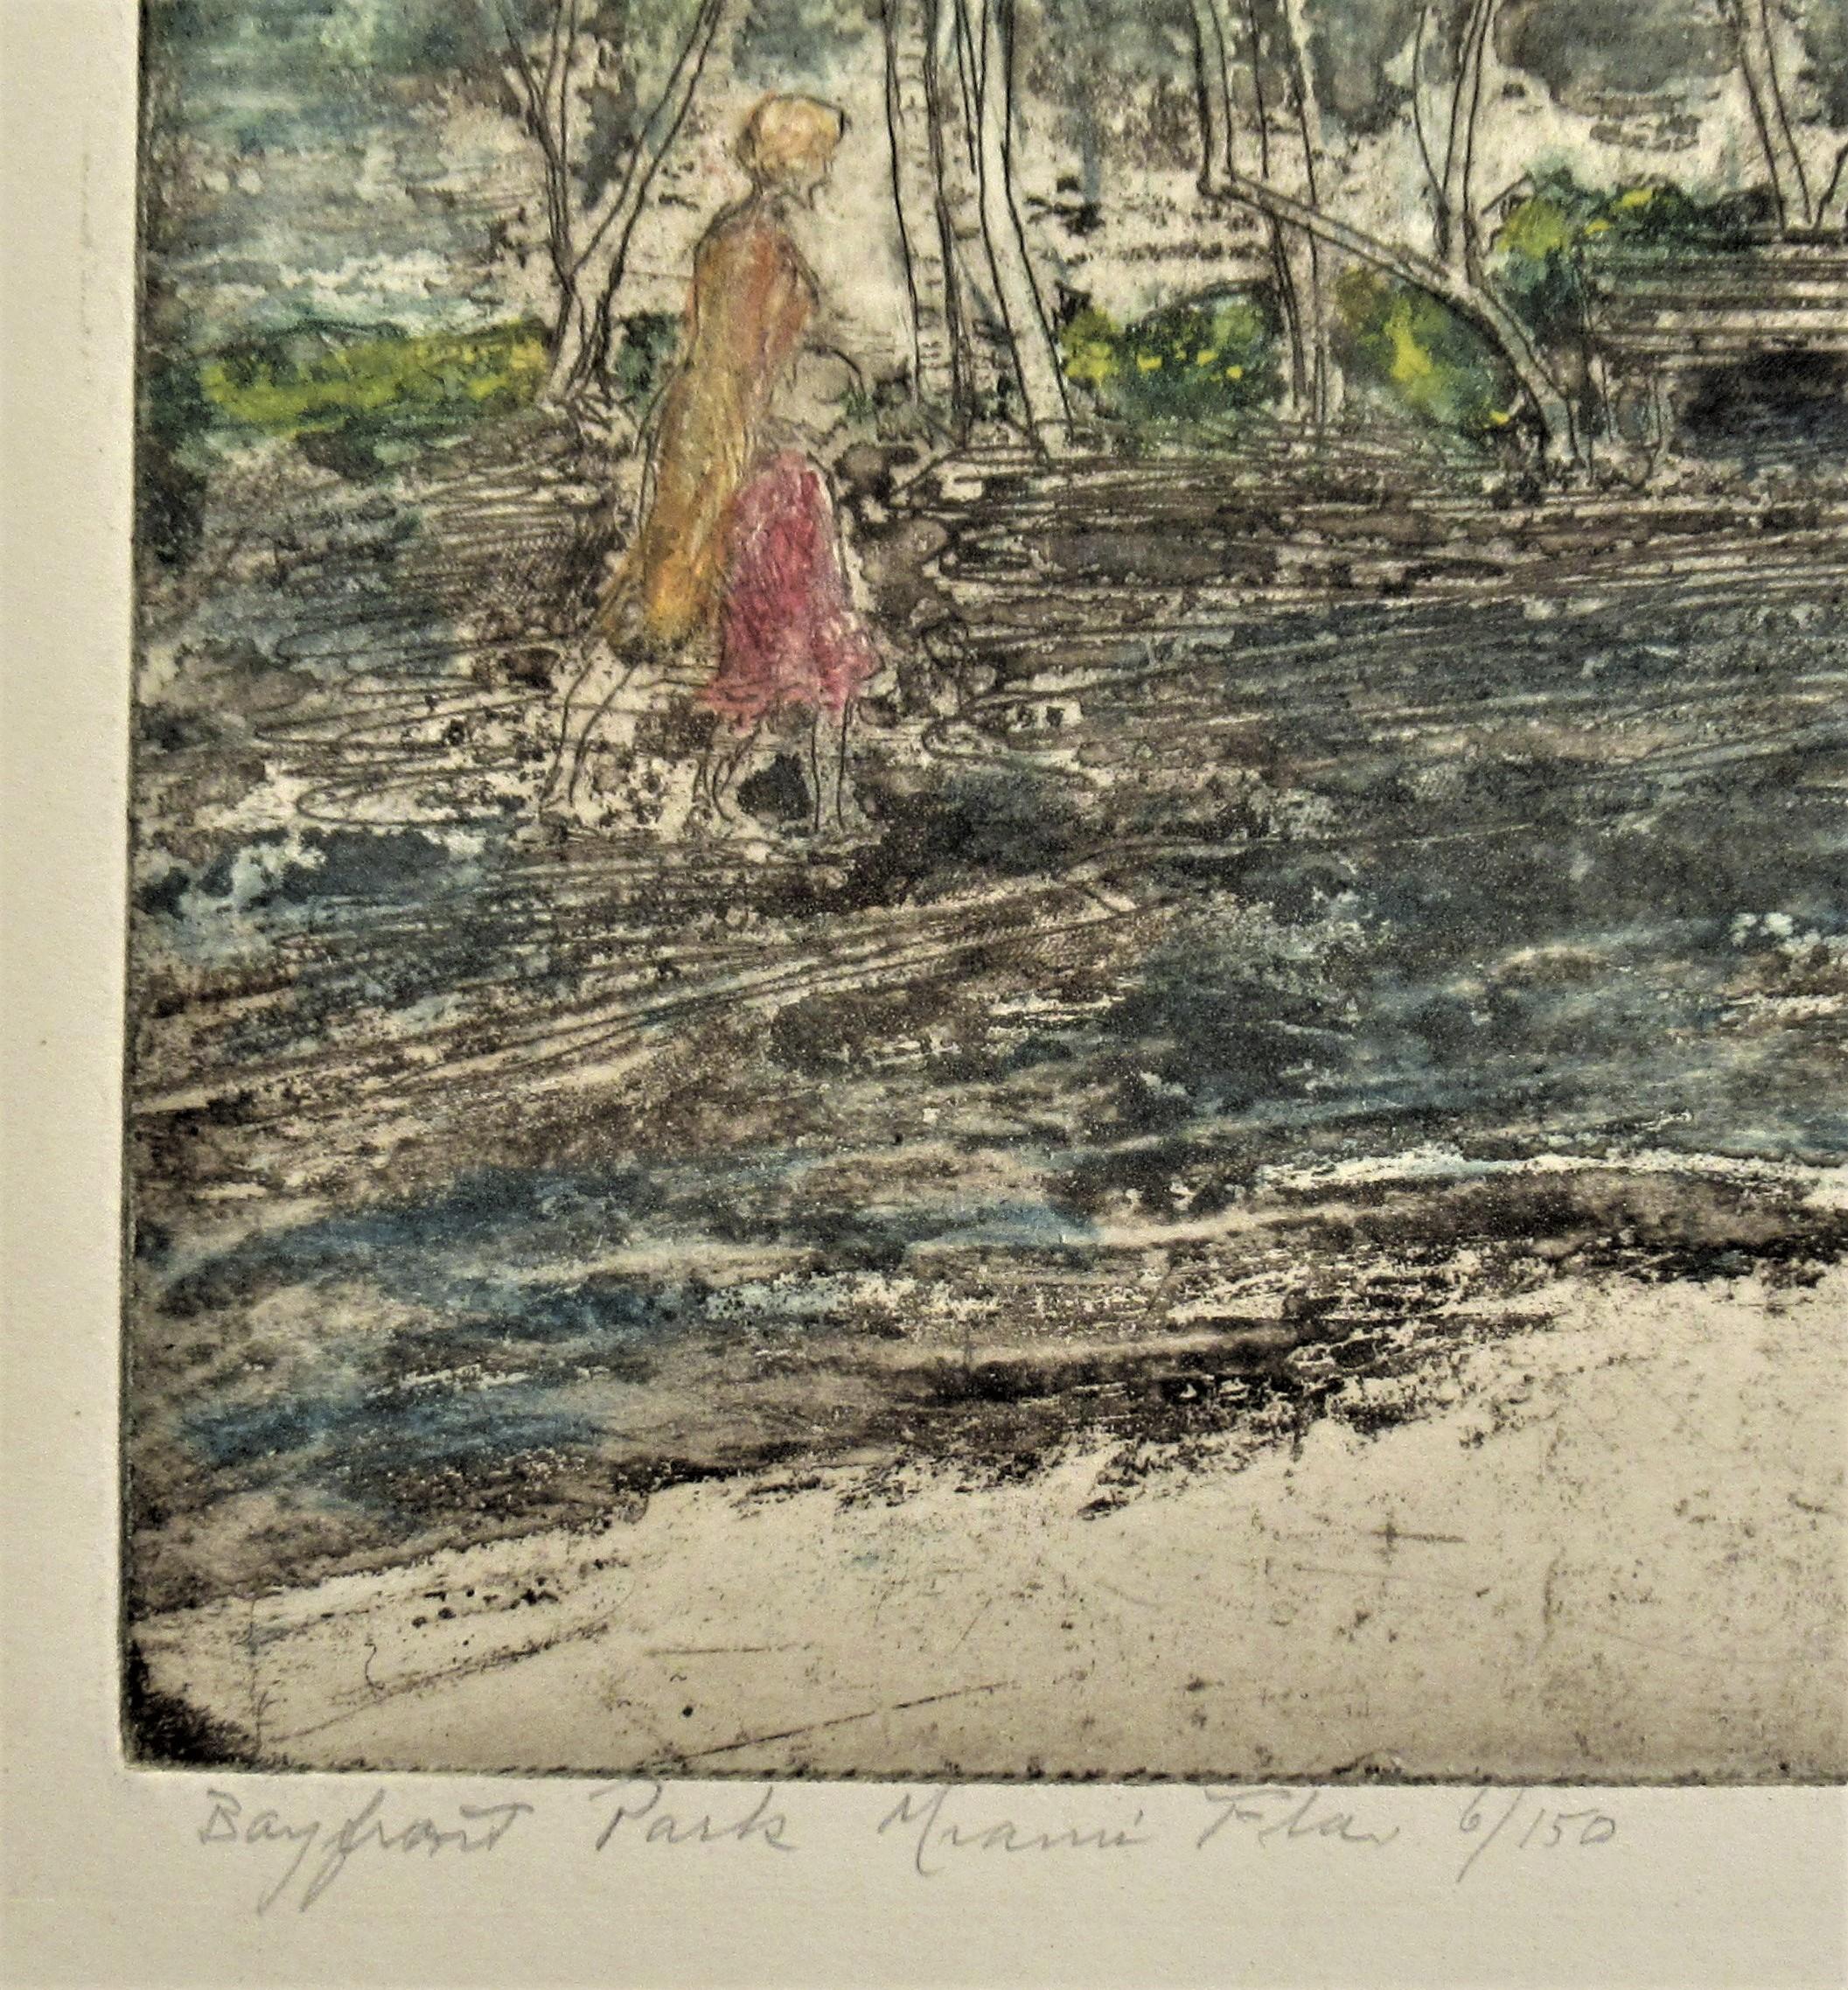 Bayfront Park, Miami, Florida - American Impressionist Print by David Rosenthal